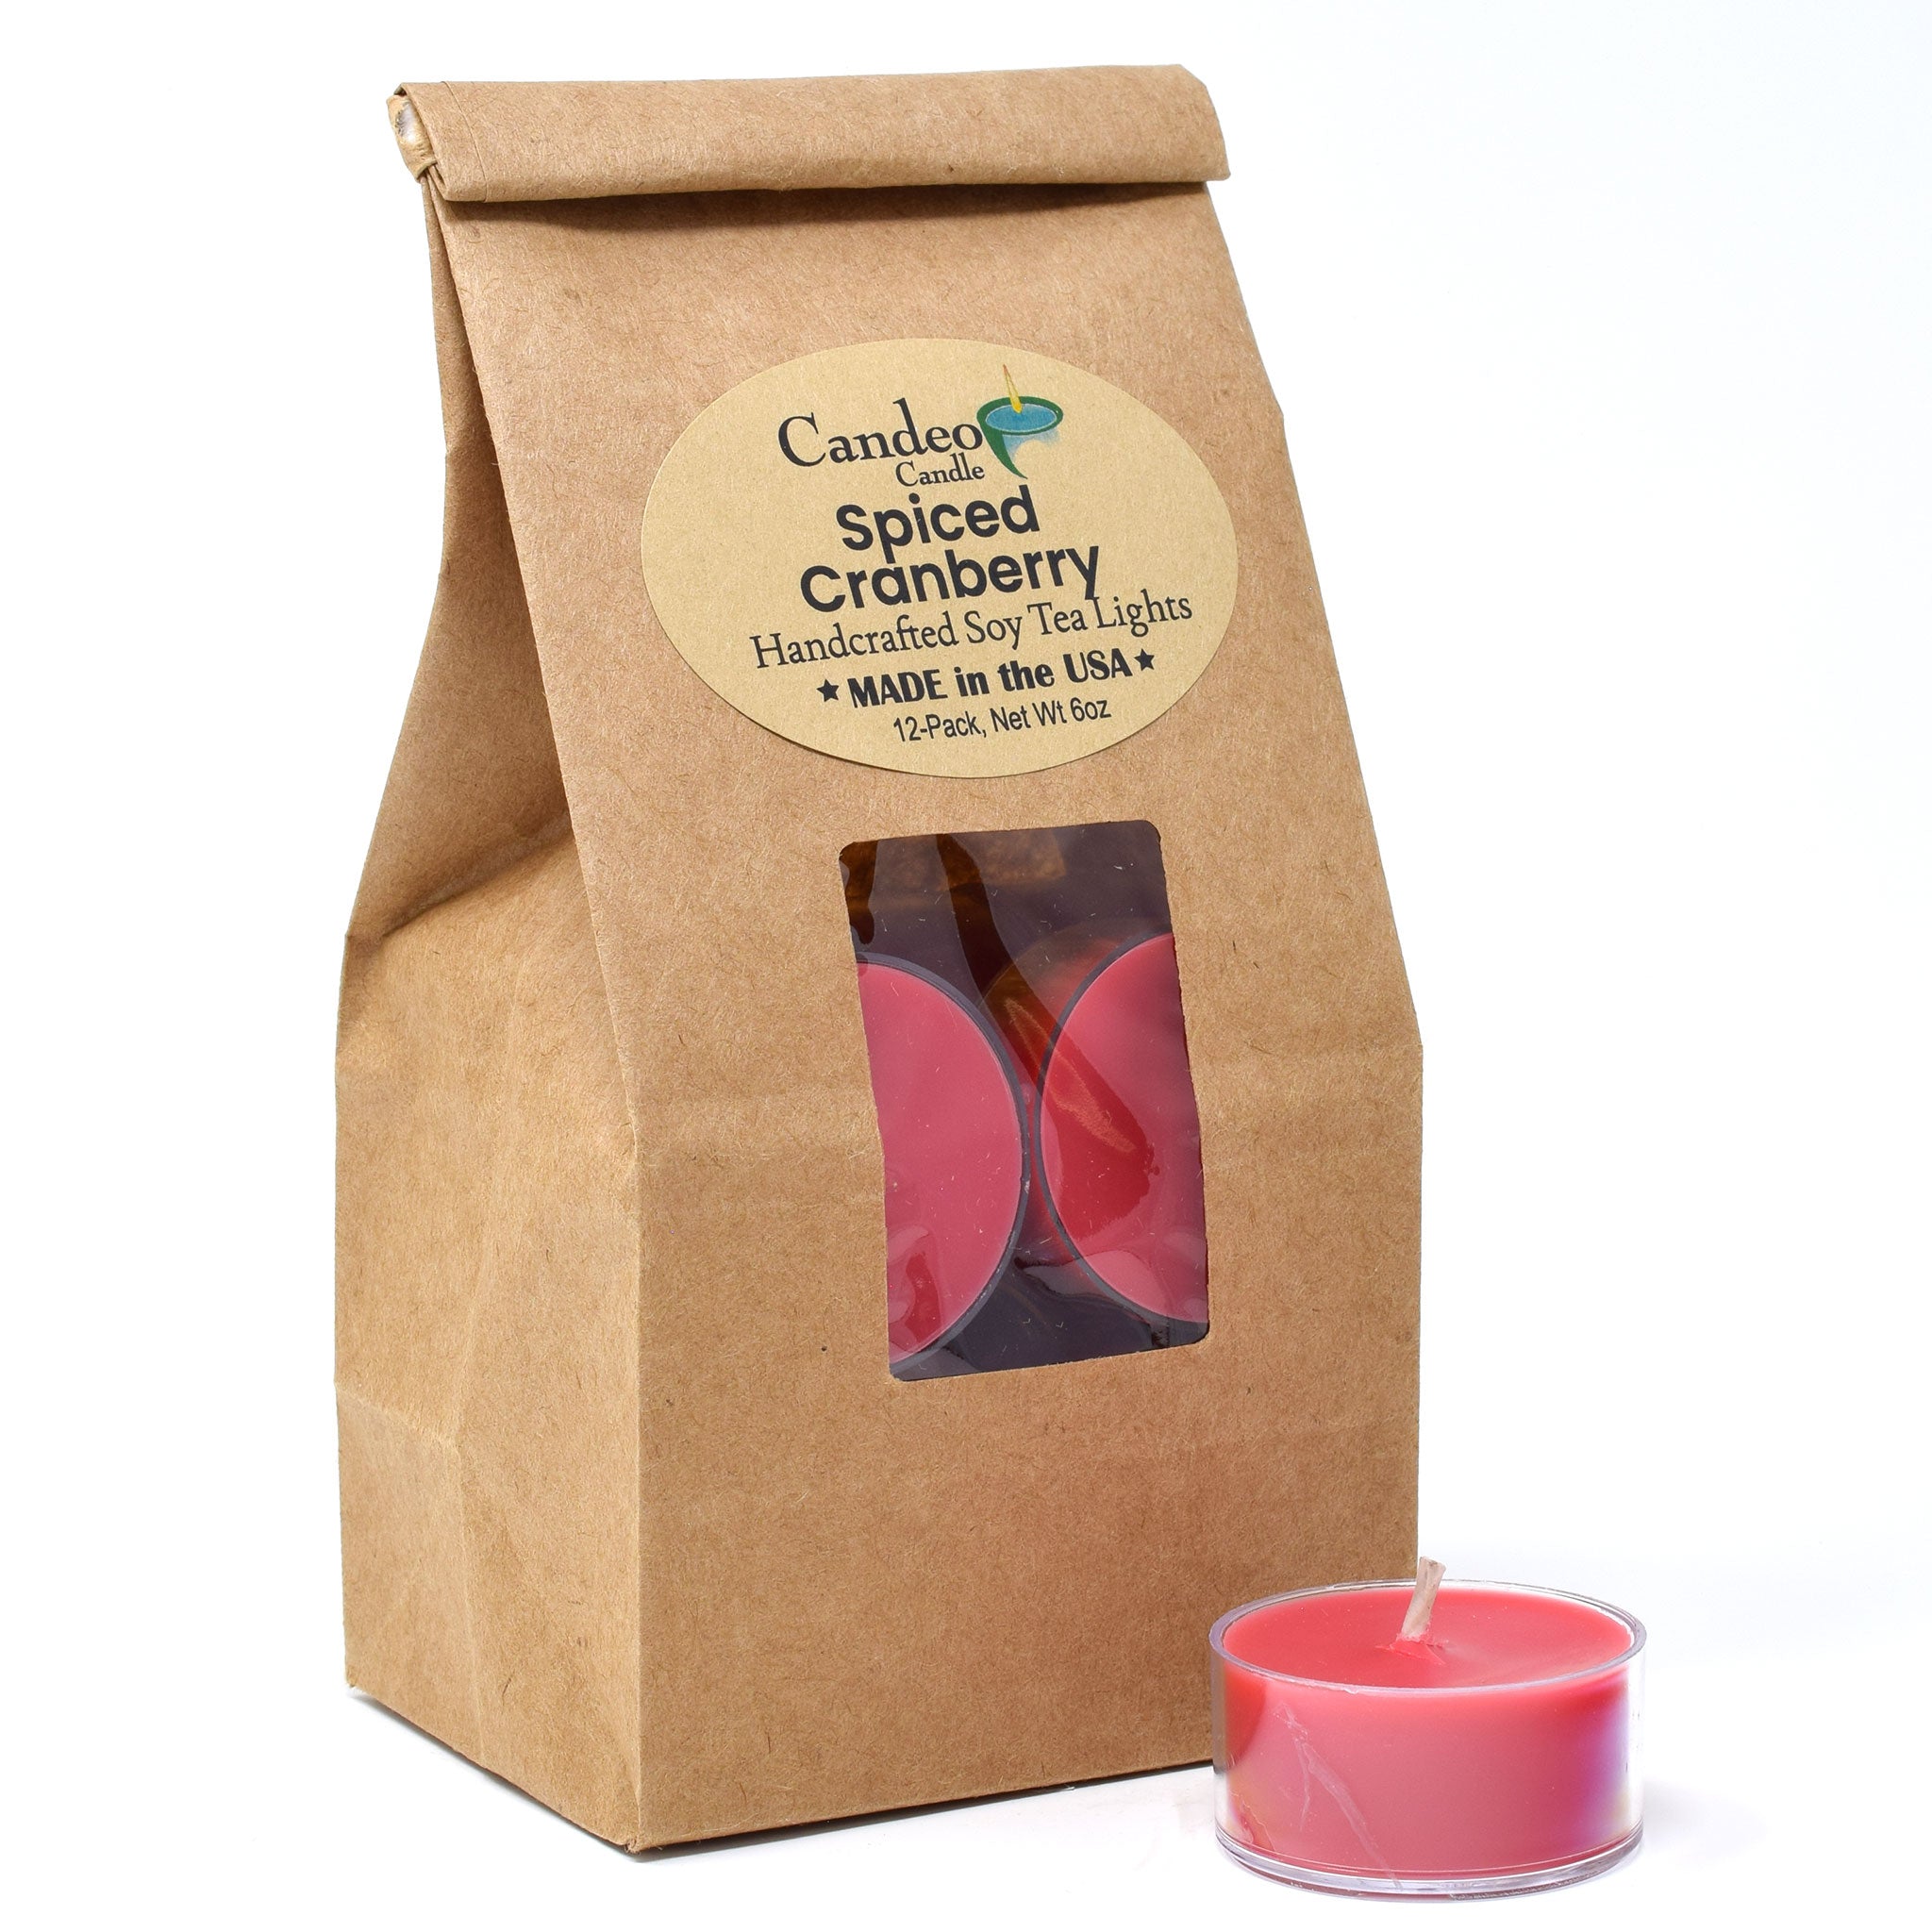 Spiced Cranberry  Soy Wax Melt – Smith and Company